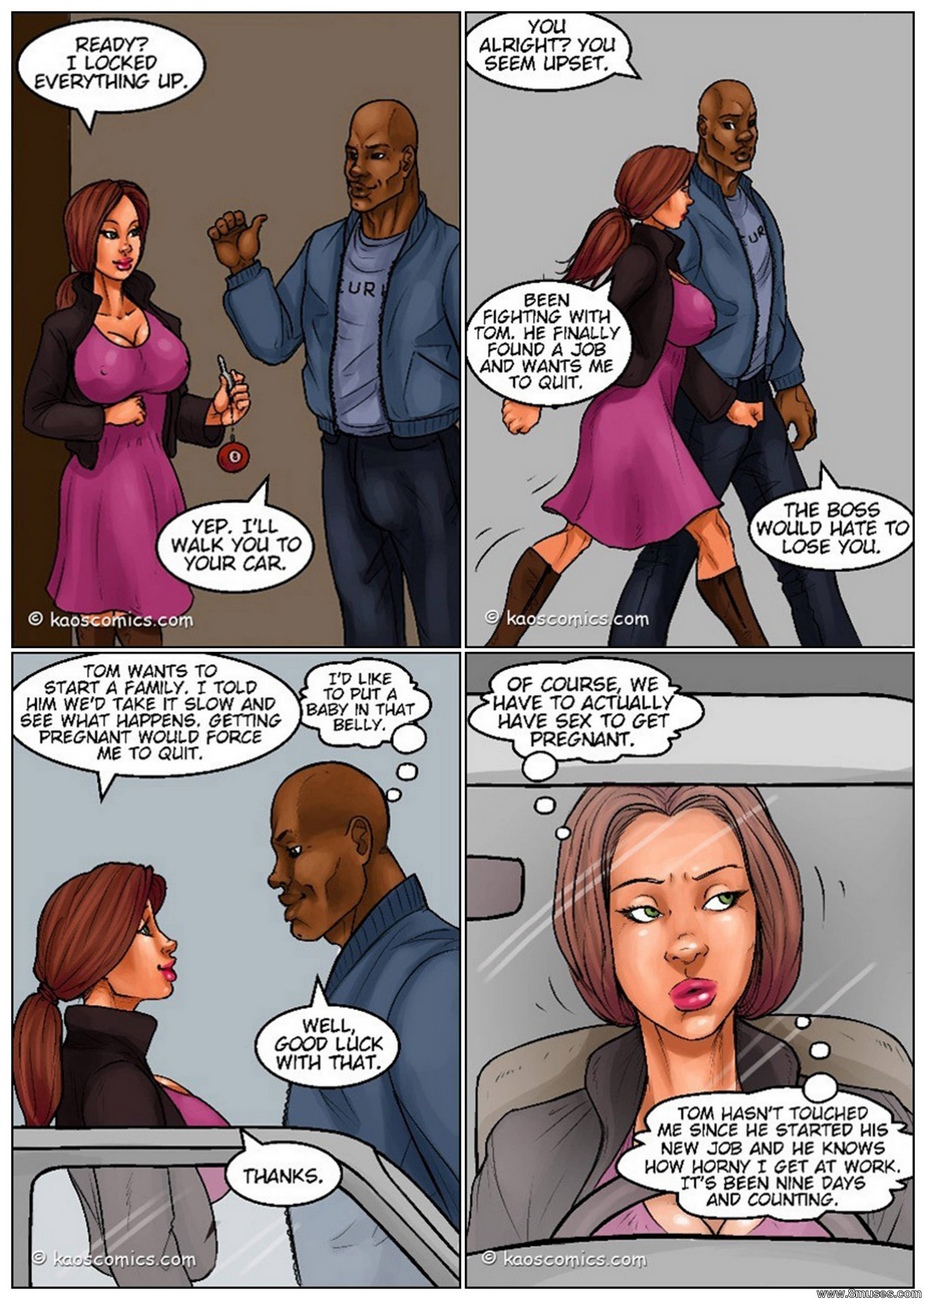 Sharing Wife Interracial Pregnant Comics Niche Top Mature image pic